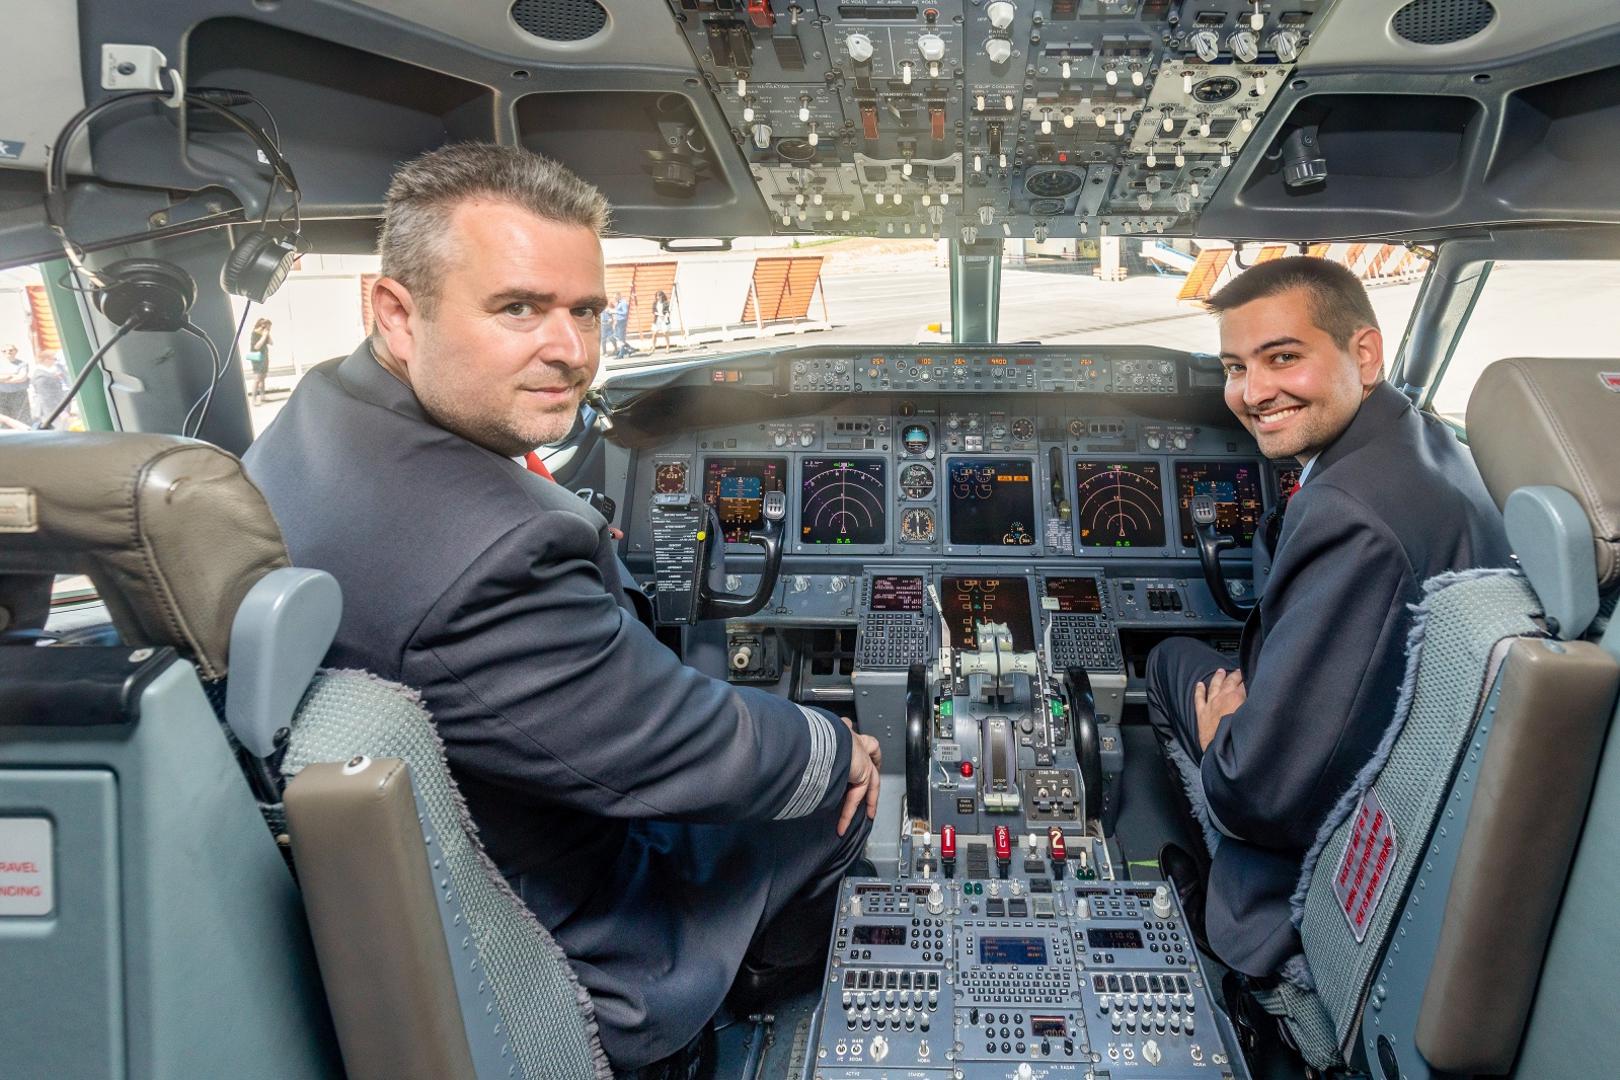 29.05.2021., Pula - U pulskoj zracnoj luci predstavljena je nova hrvatska zrakoplovna tvrtka ETF AIRWAYS te njihov prvi putnicki zrakoplov Boeing 737-800. Photo: Srecko Niketic/PIXSELL